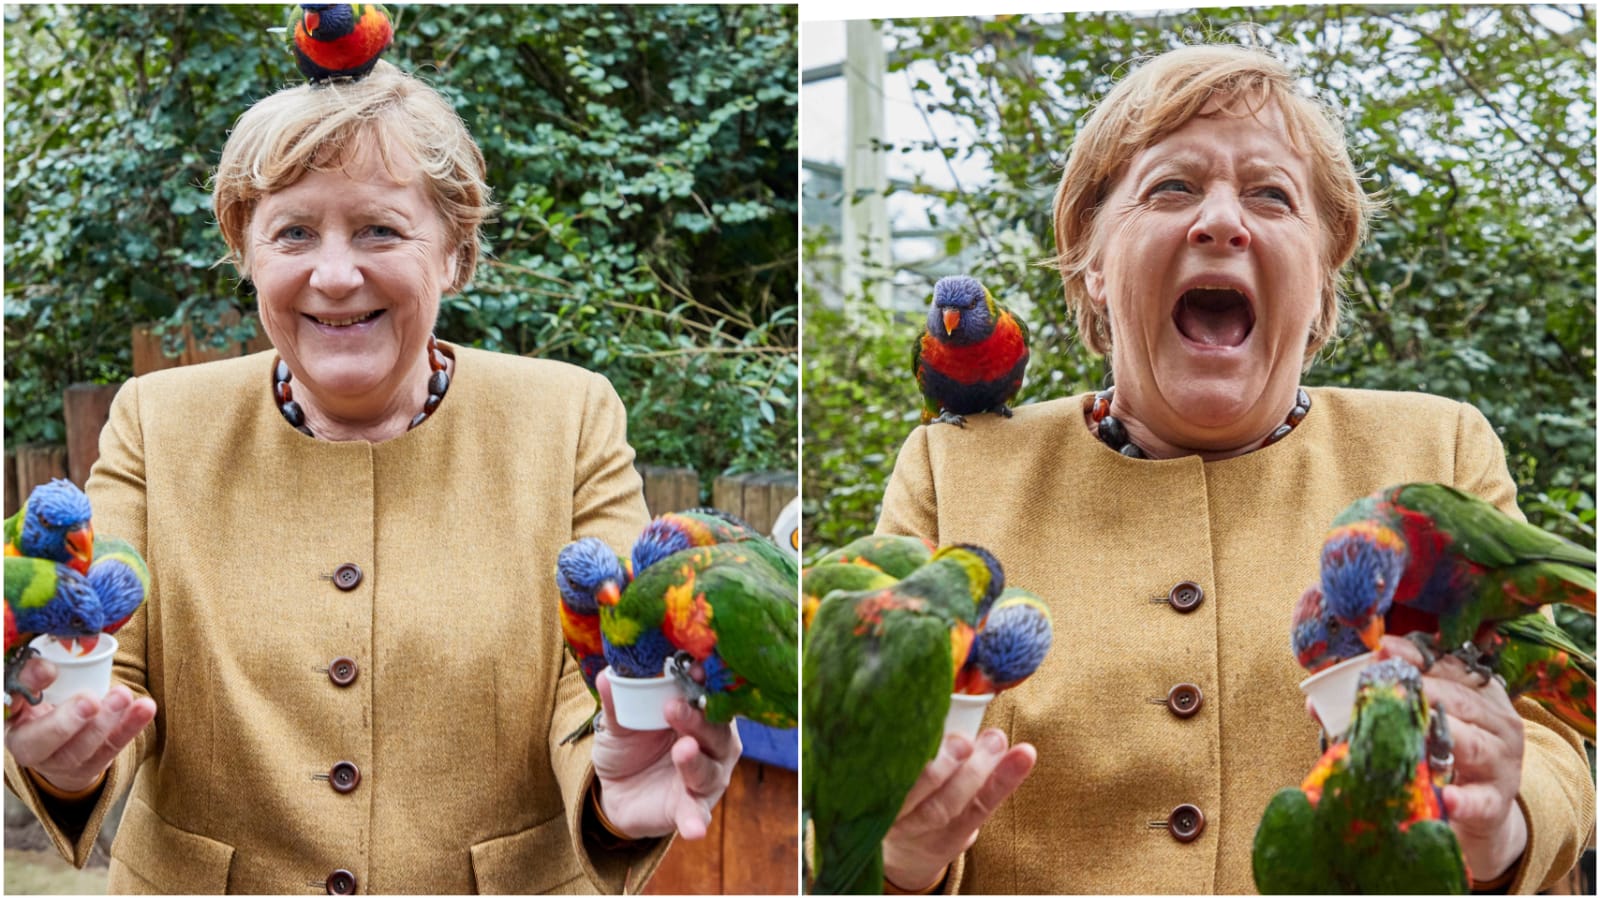 Bird-attack! Angela Merkel pecked at by parrots on park trip